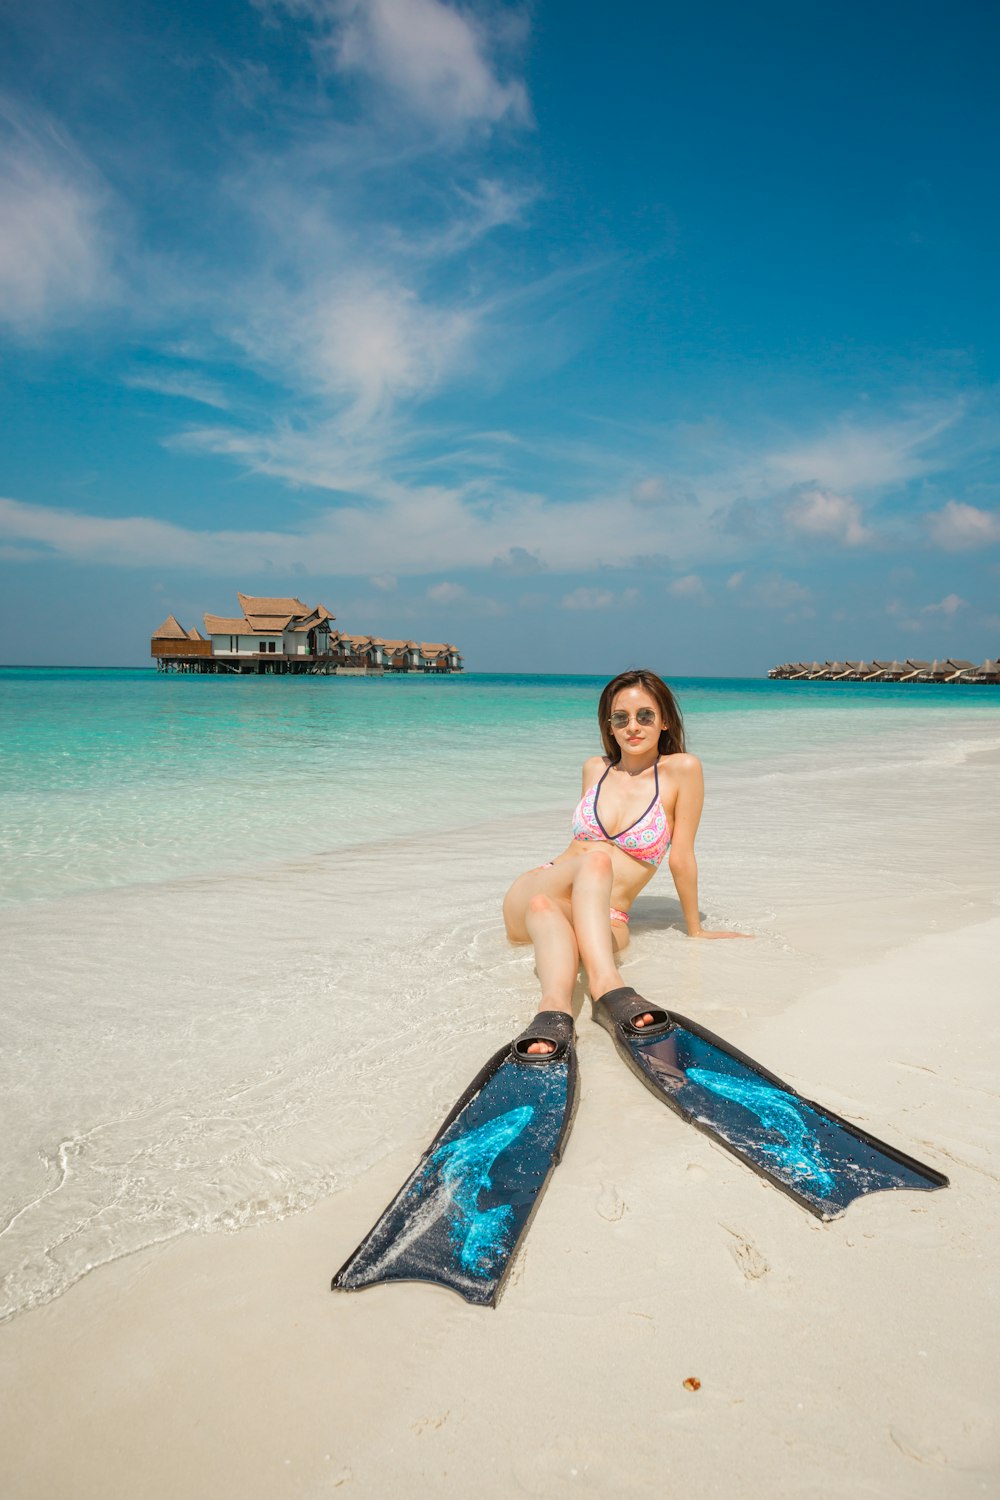 a woman in a bikini sitting on a surfboard on the beach